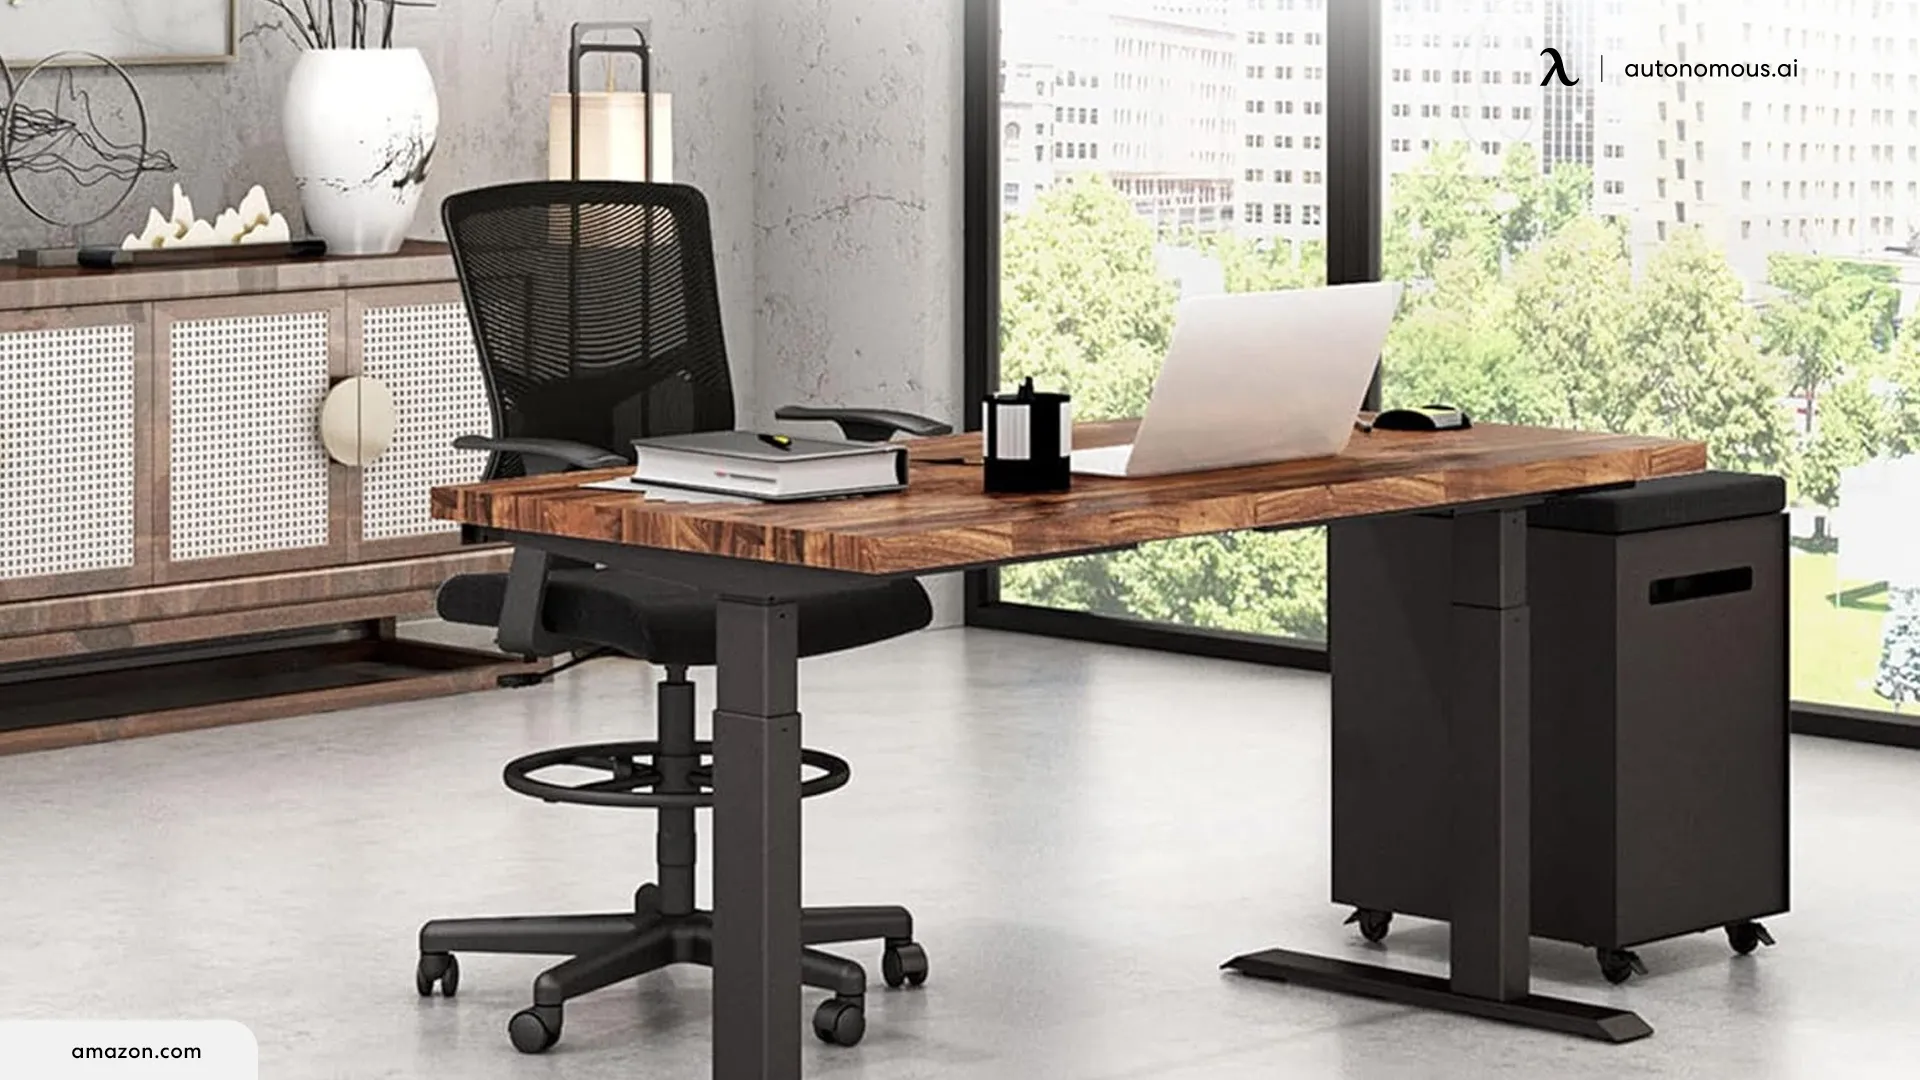 Natural Wood - standing desk tabletop